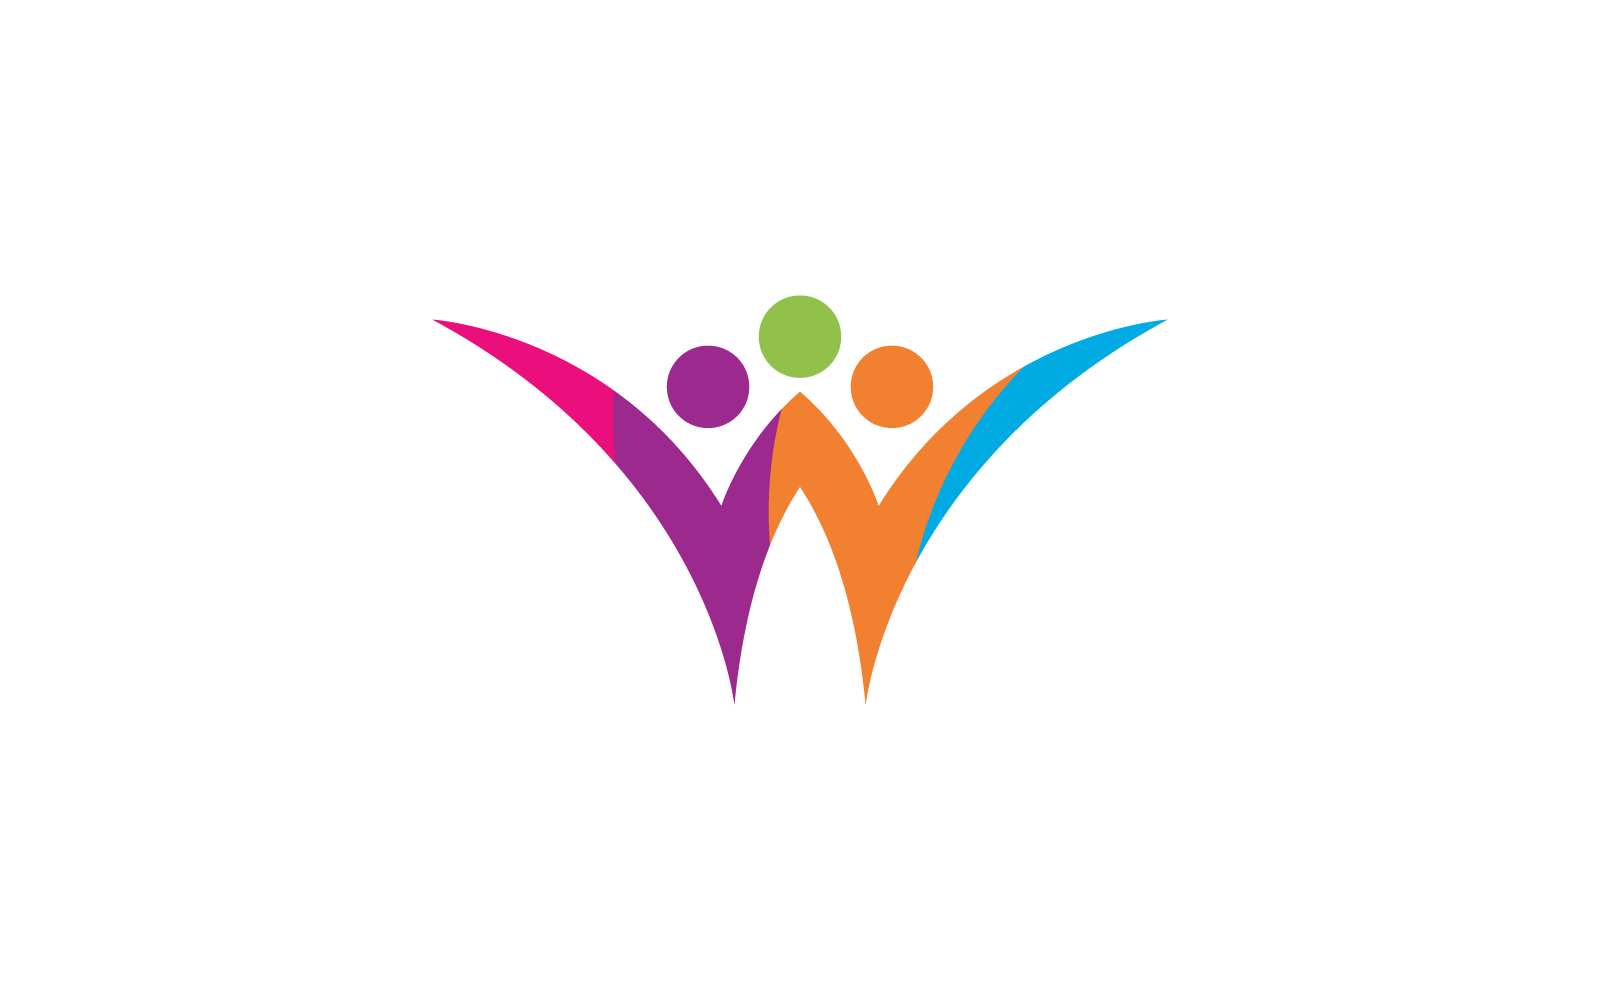 V W initial Community, network and social logo design Logo Template